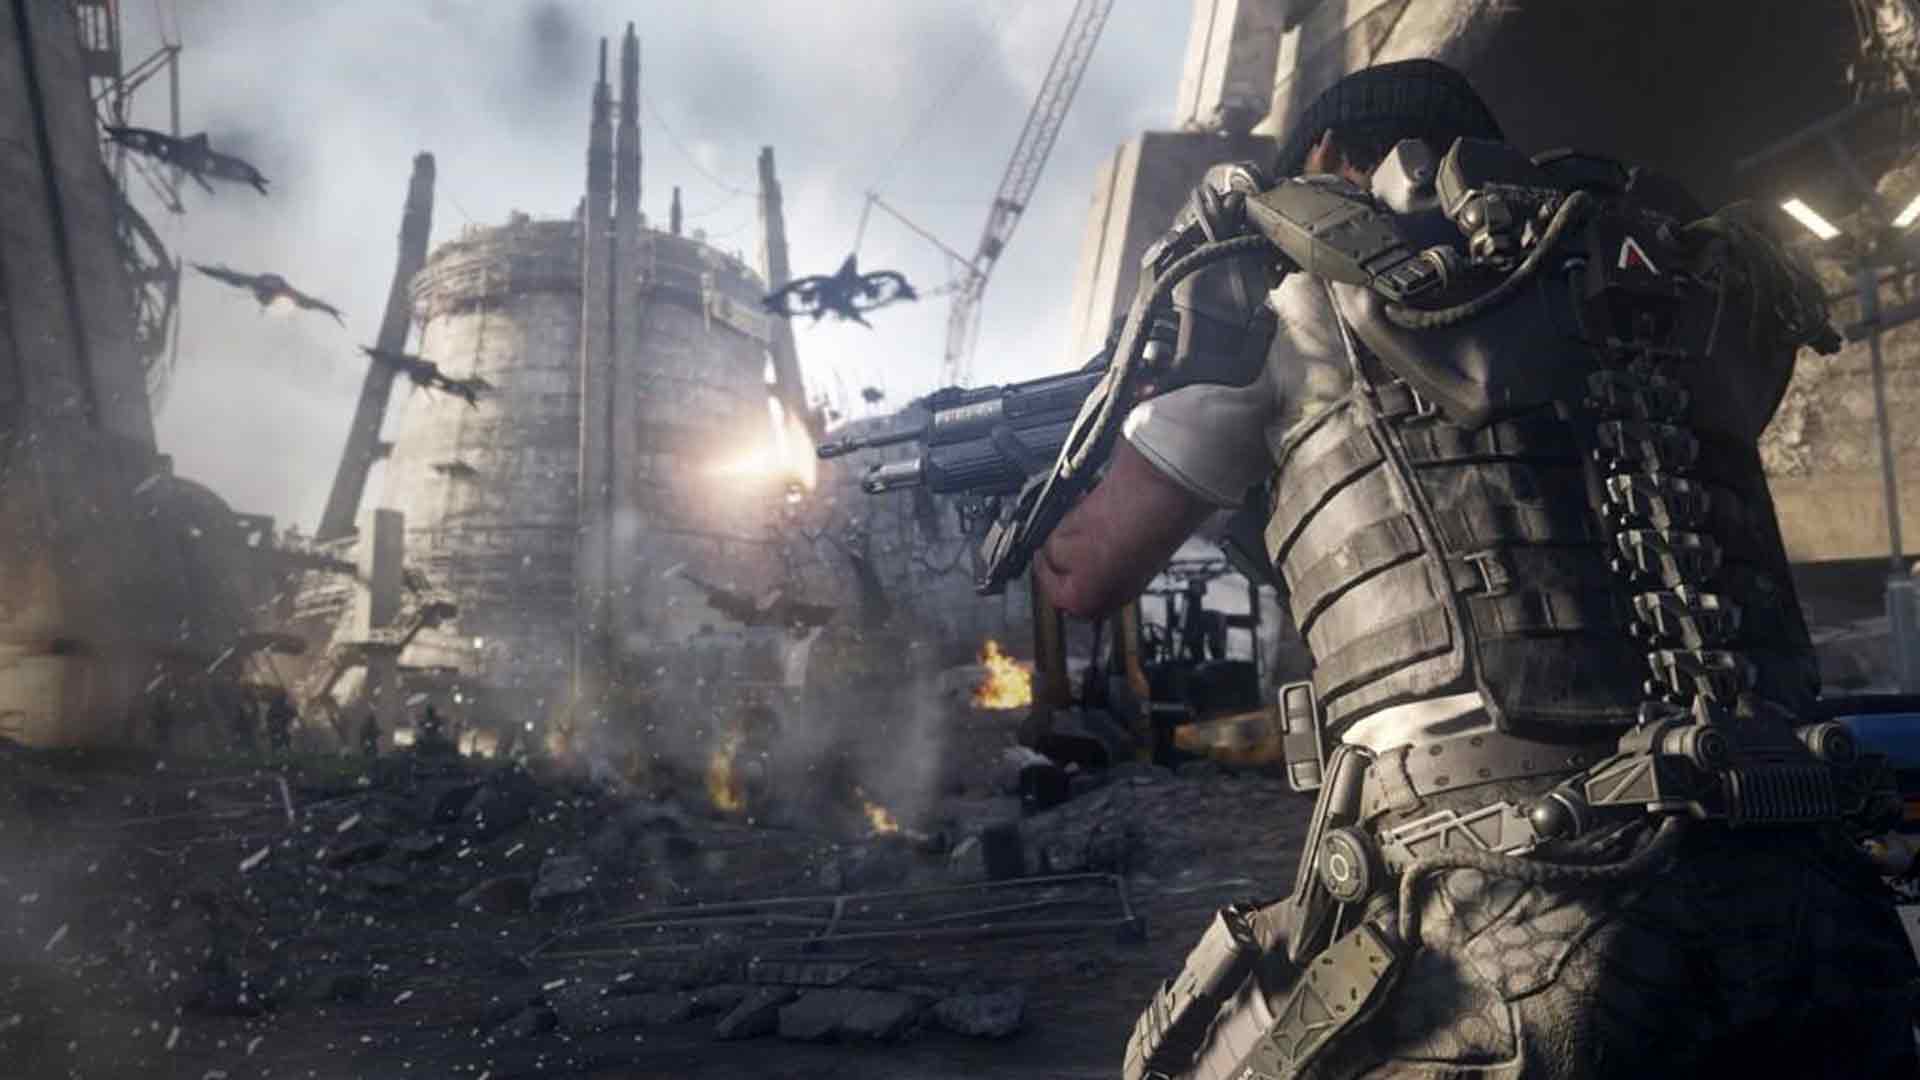 Call of Duty Advanced Warfare Xbox One